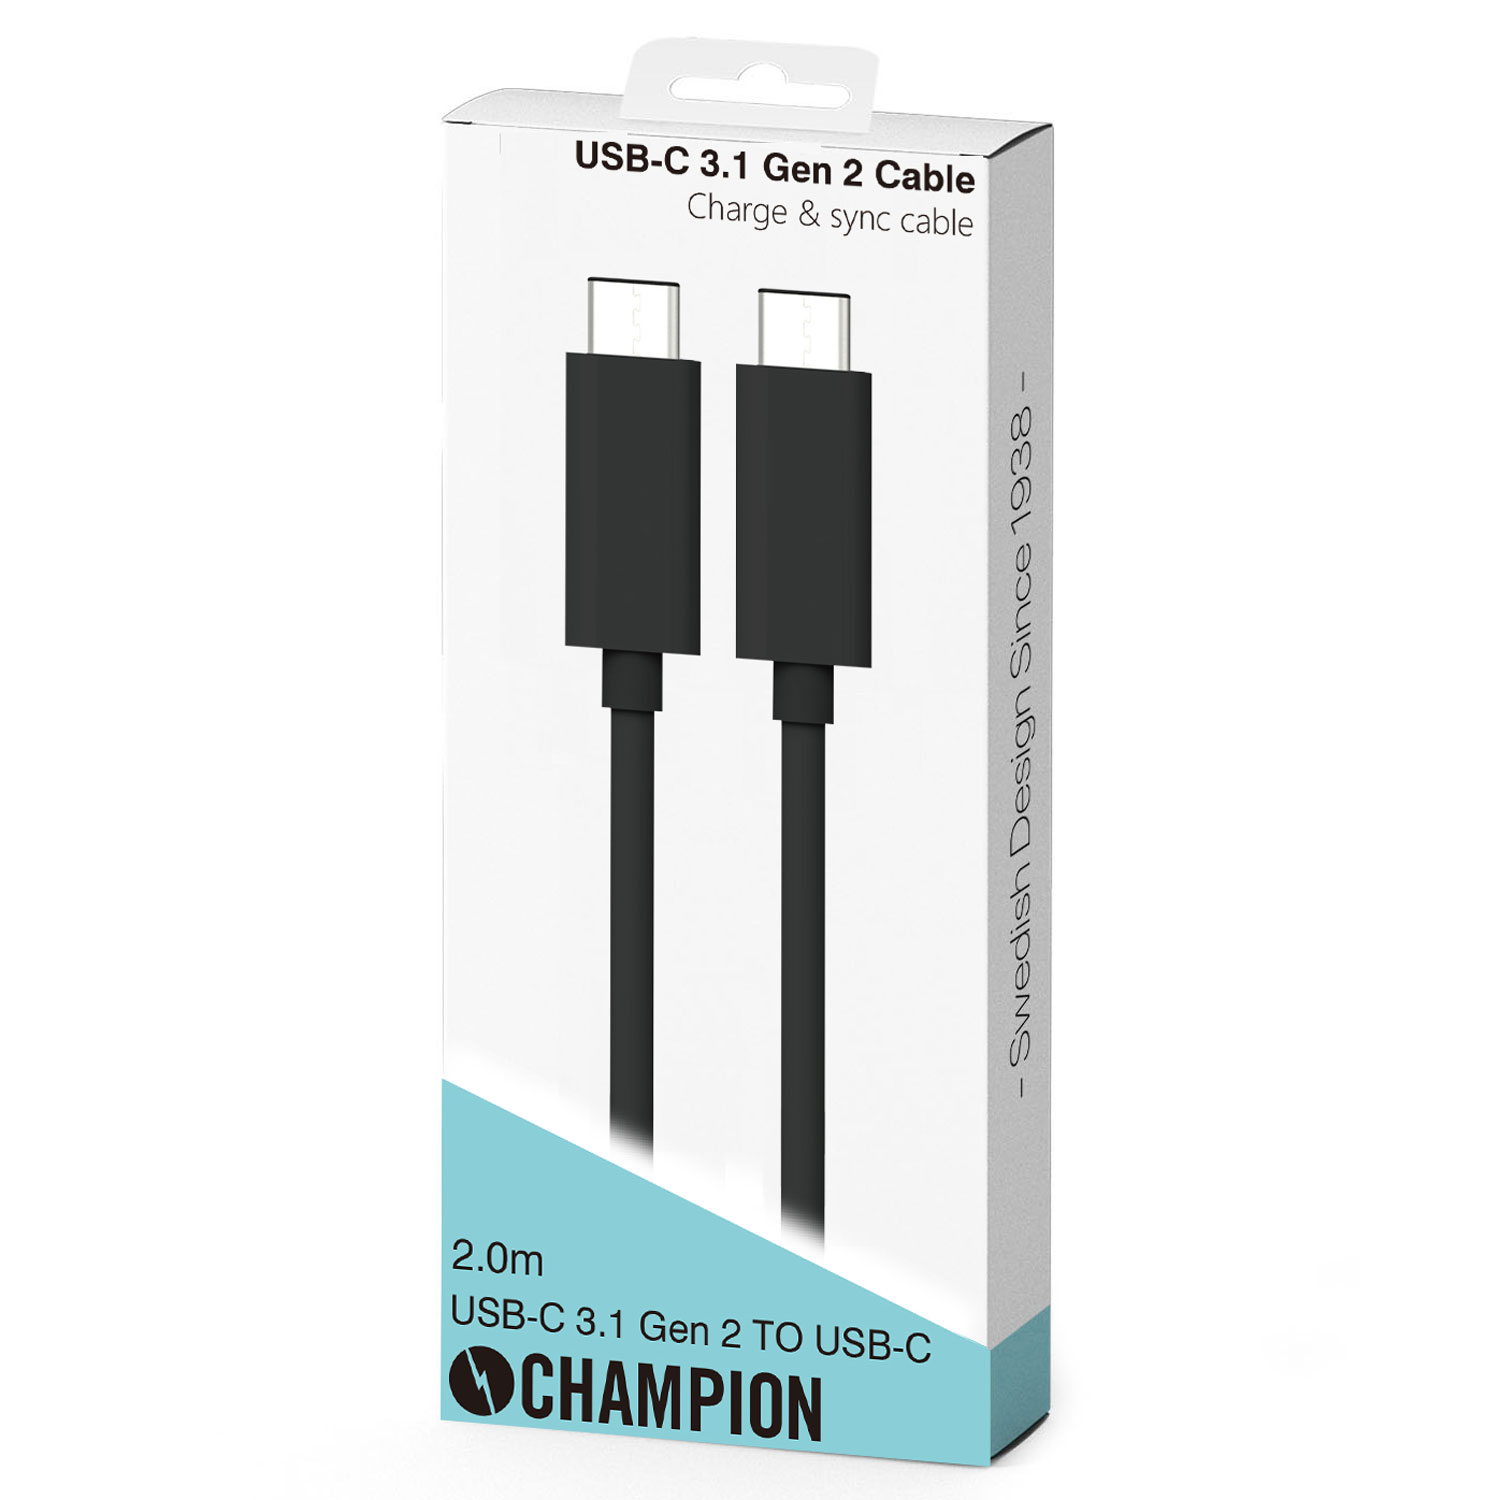 m - Gen2 CHAMPION C, USB Kabale C 2 USB-C 3.1